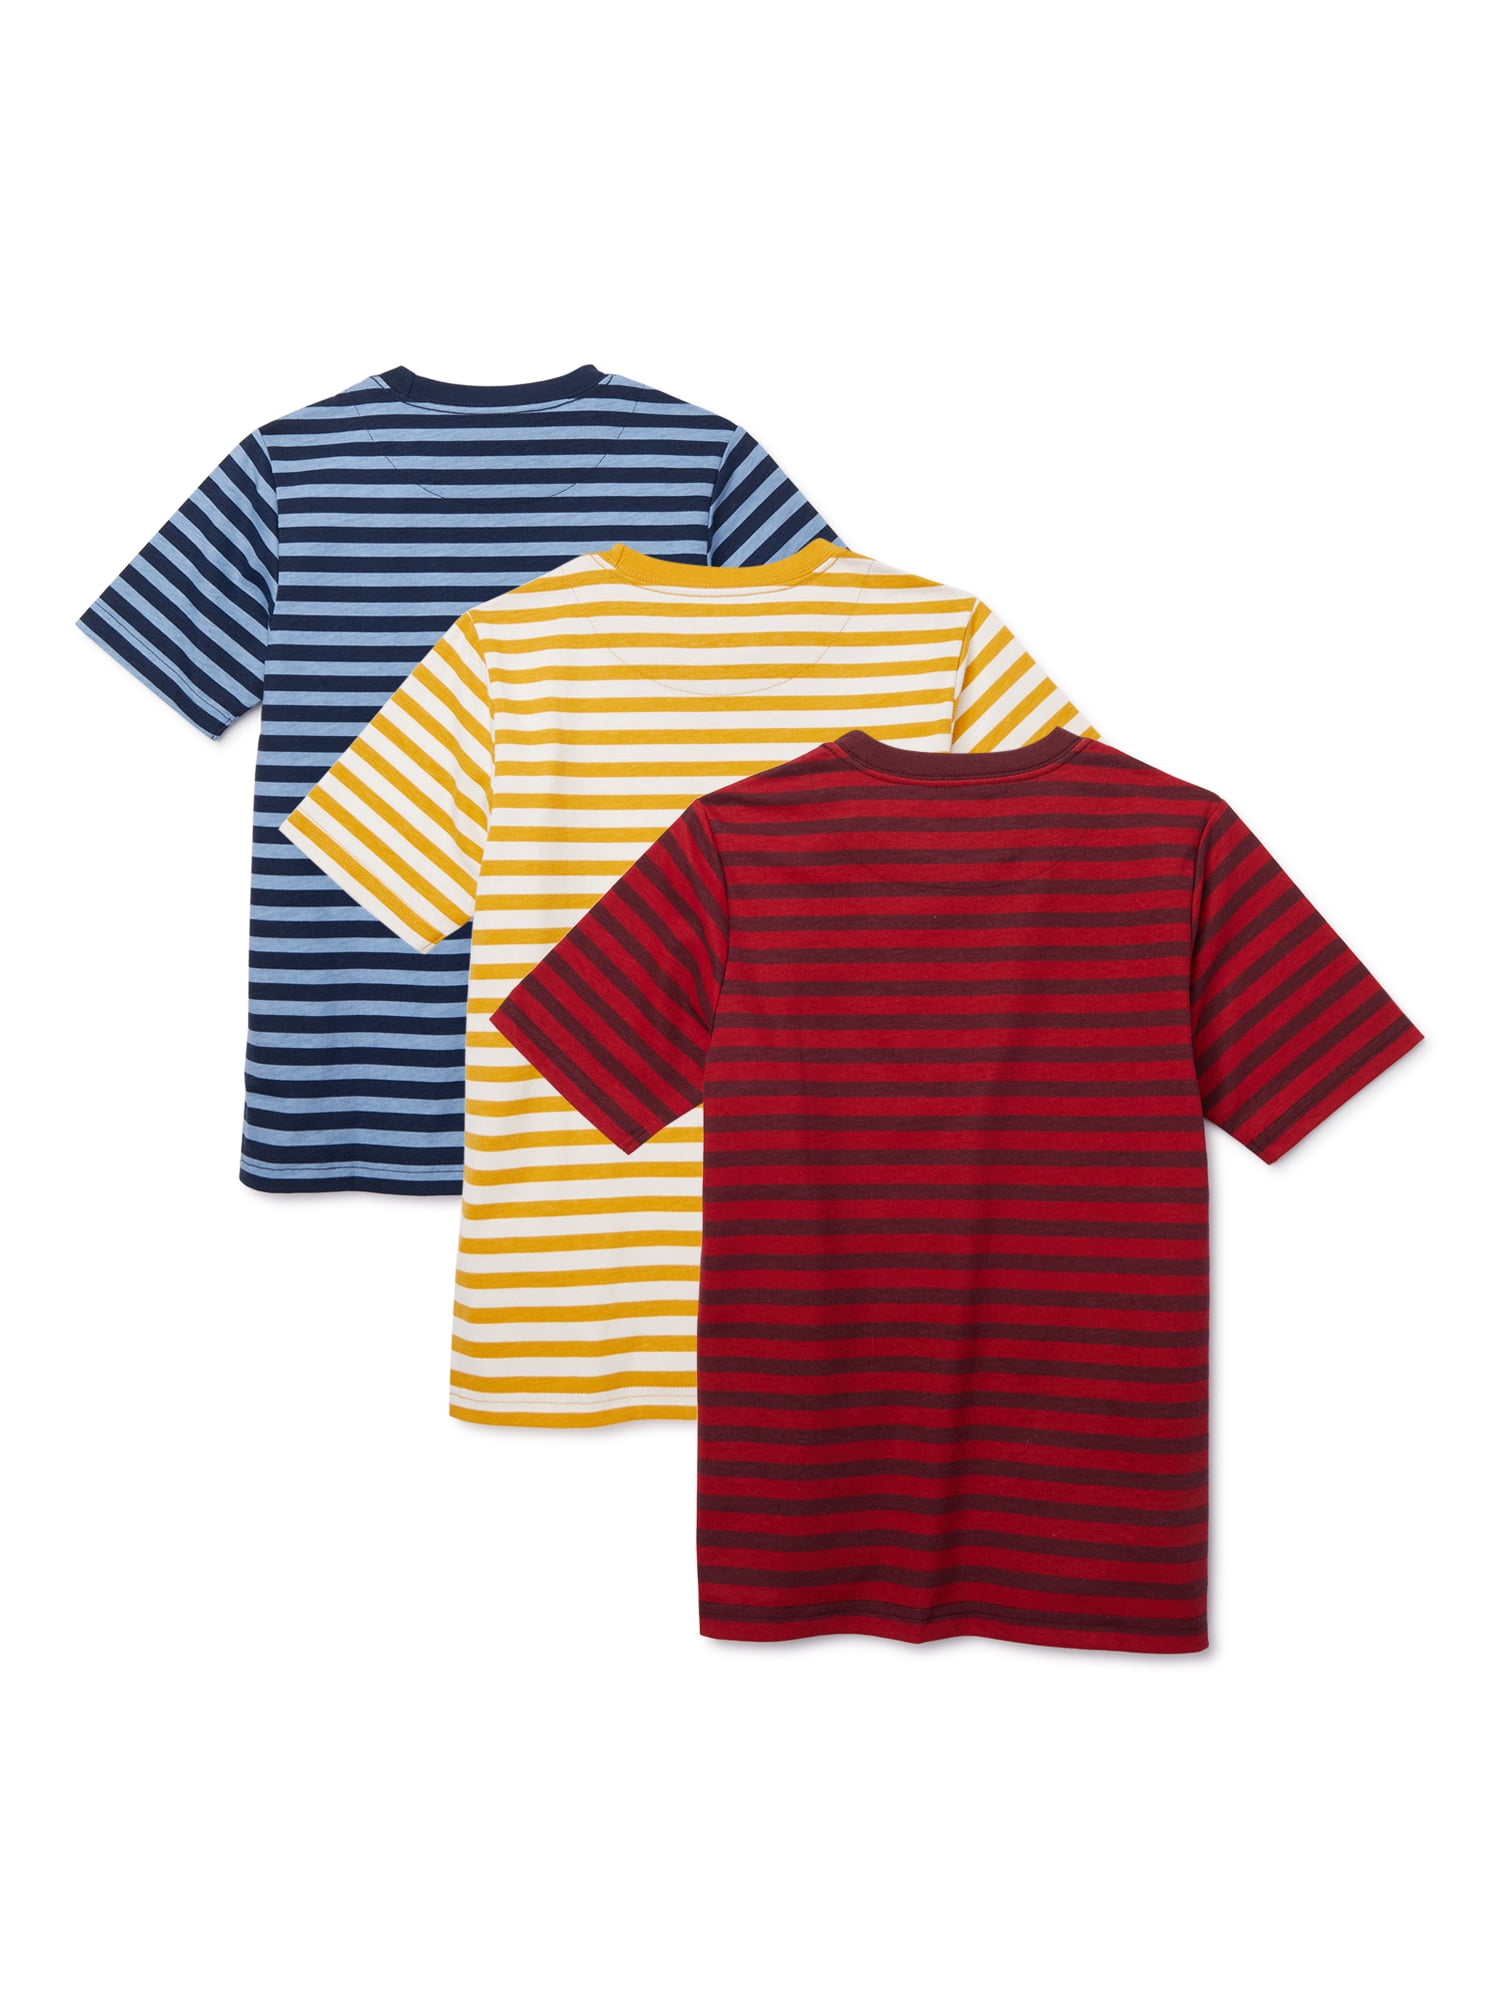 NWT Details about   Wonder Nation Boys Blue Tag Free Short Sleeve Raglan T-Shirt Size S 6-7